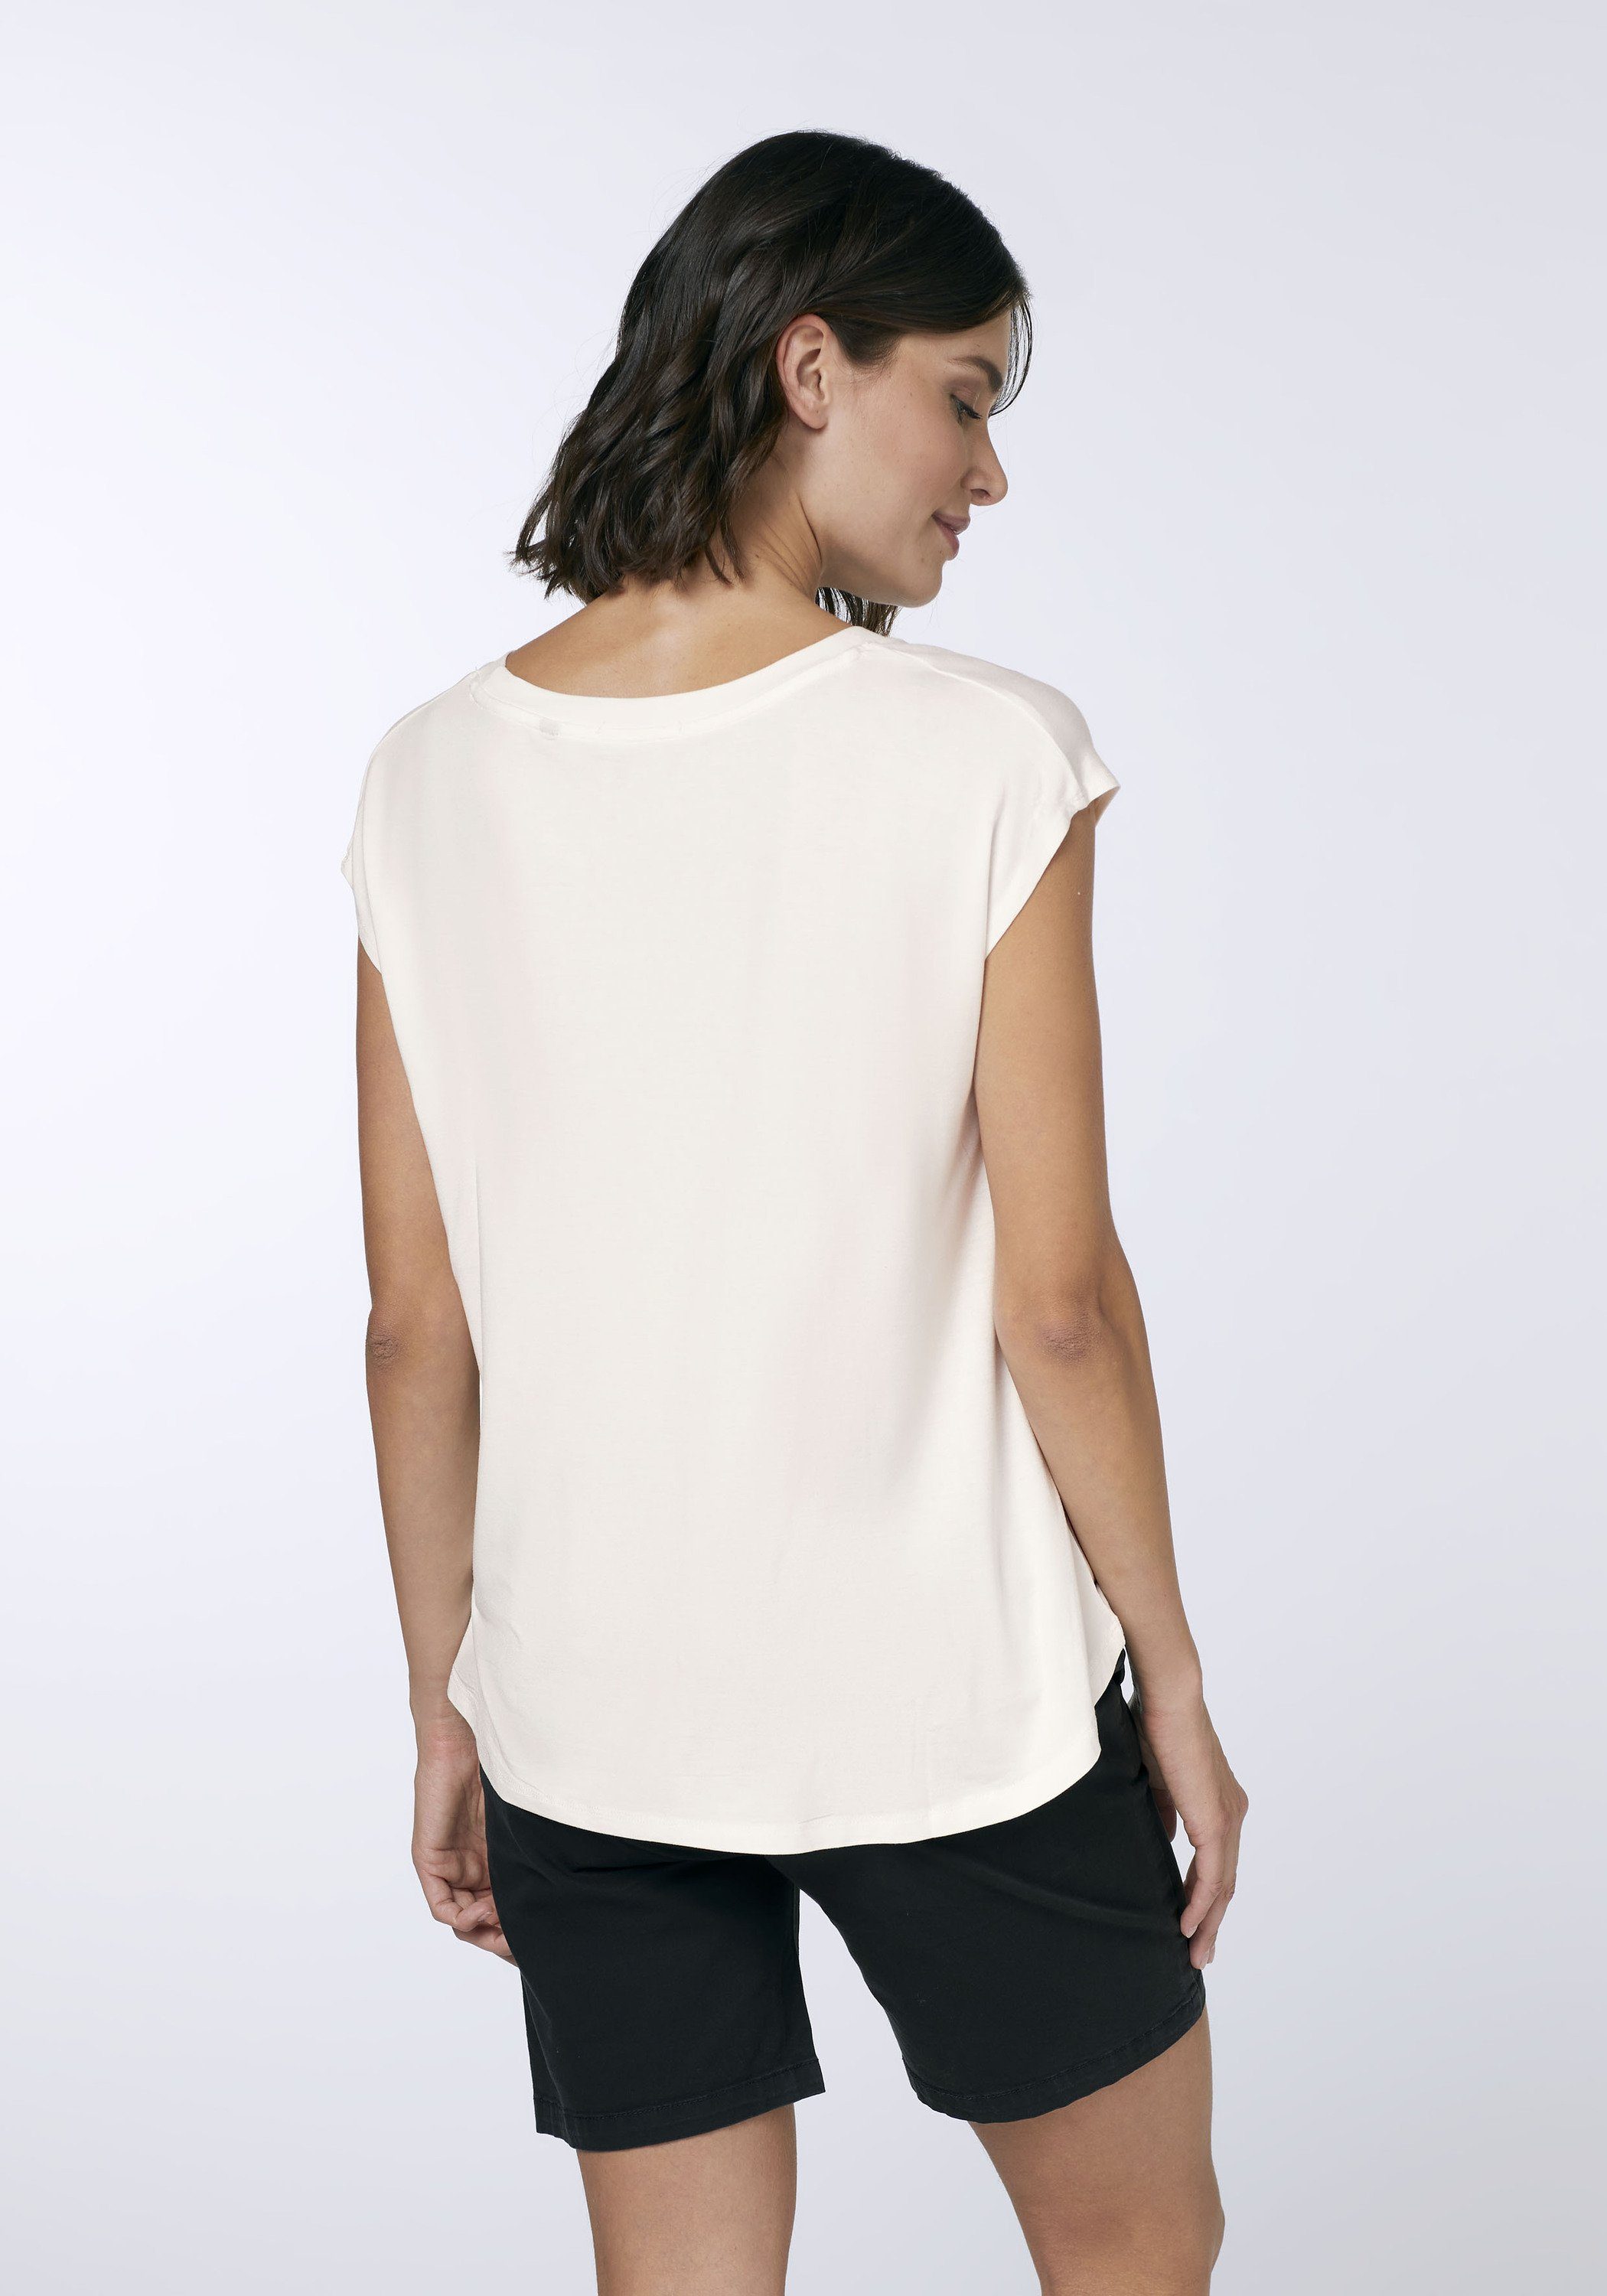 Chiemsee Print-Shirt T-Shirt aus Viskose-Elasthanmix Labelprint mit Star White 1